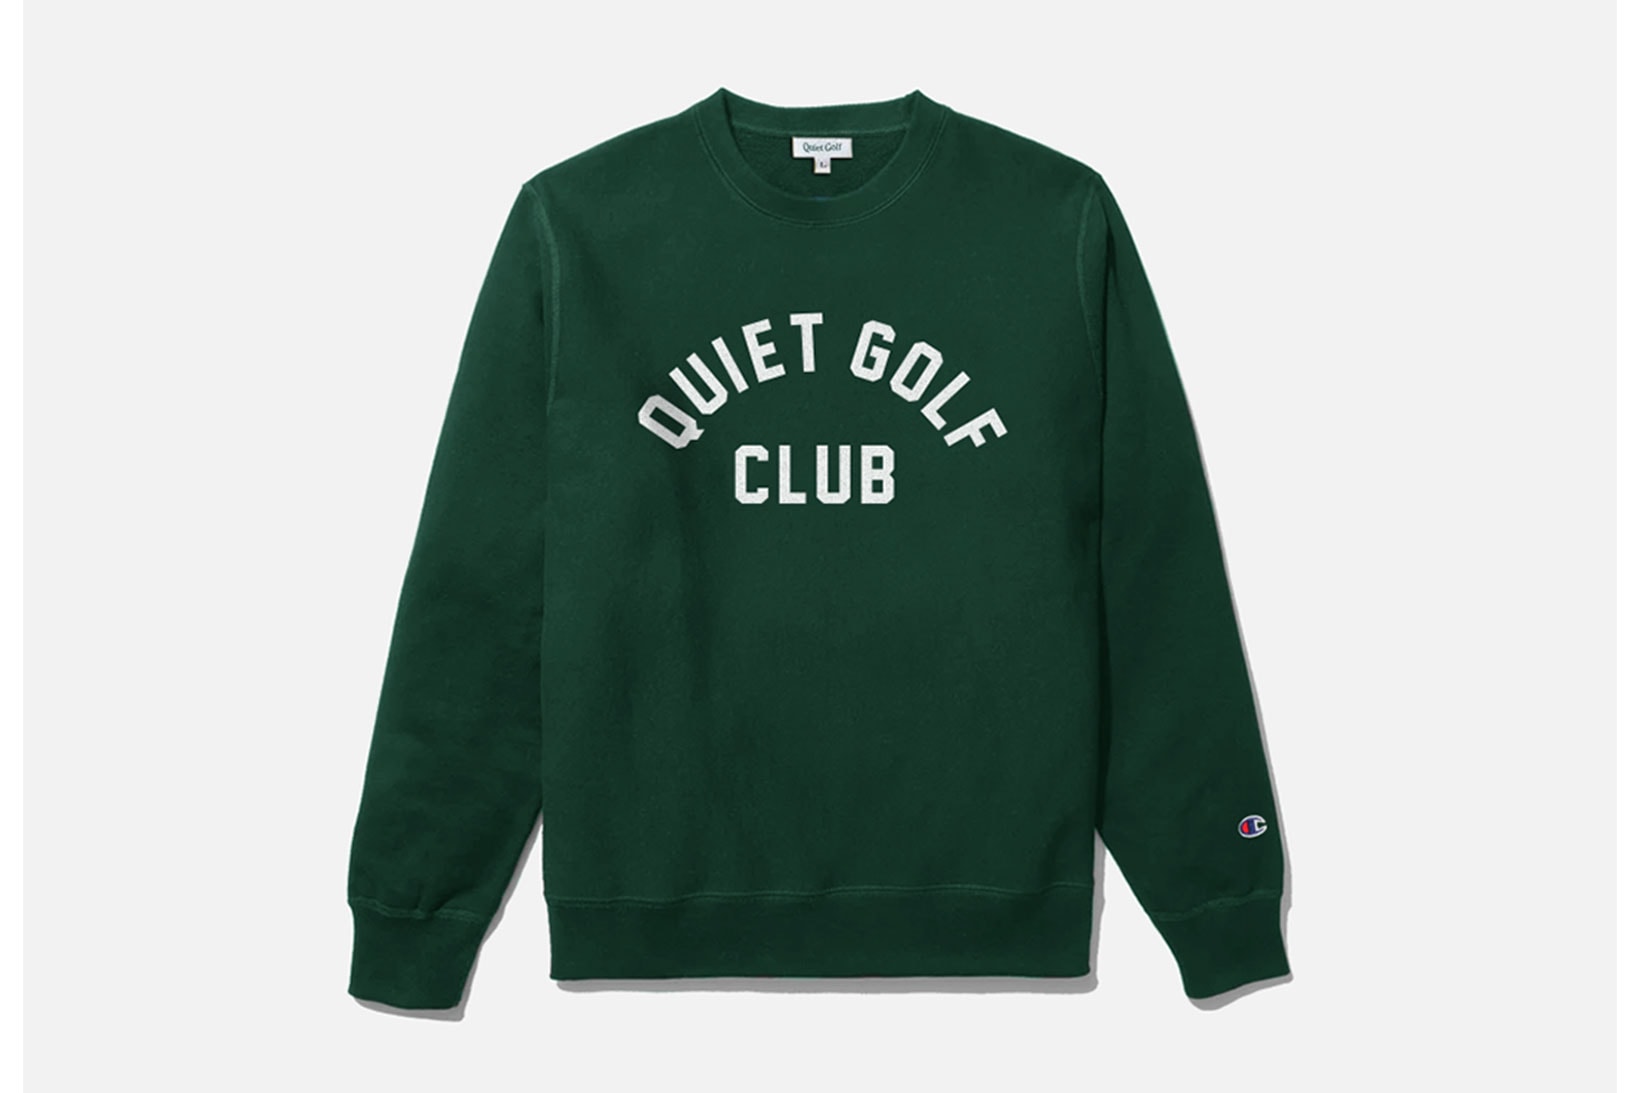 Quiet Golf Sweater Crewneck